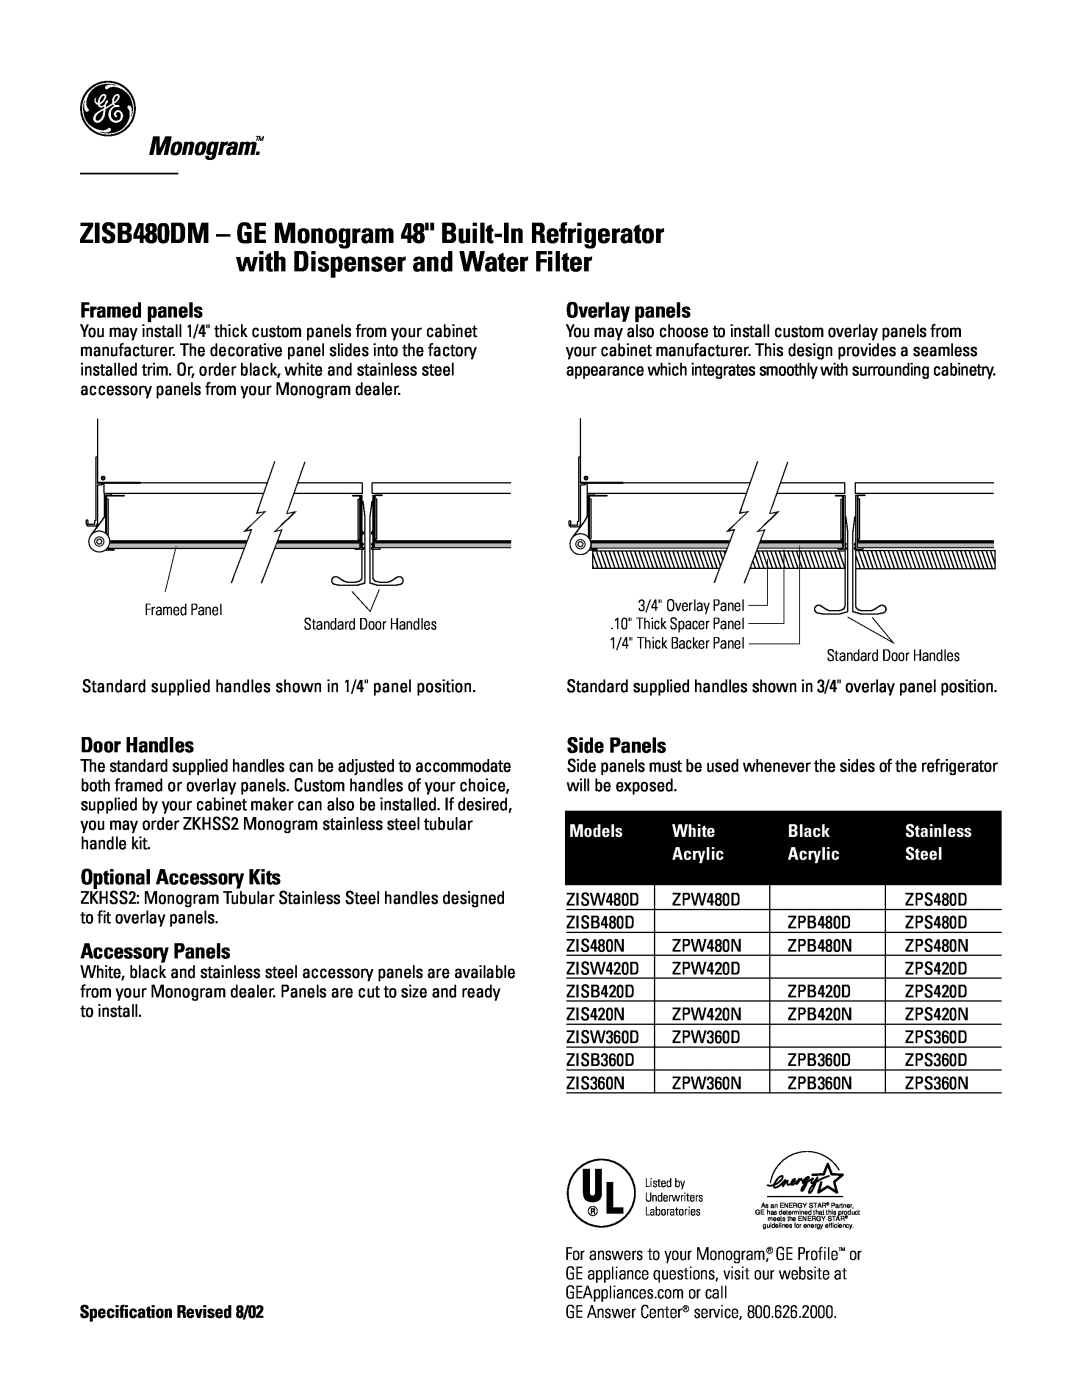 GE Monogram ZISB480DM Monogram, Framed panels, Overlay panels, Door Handles, Optional Accessory Kits, Accessory Panels 